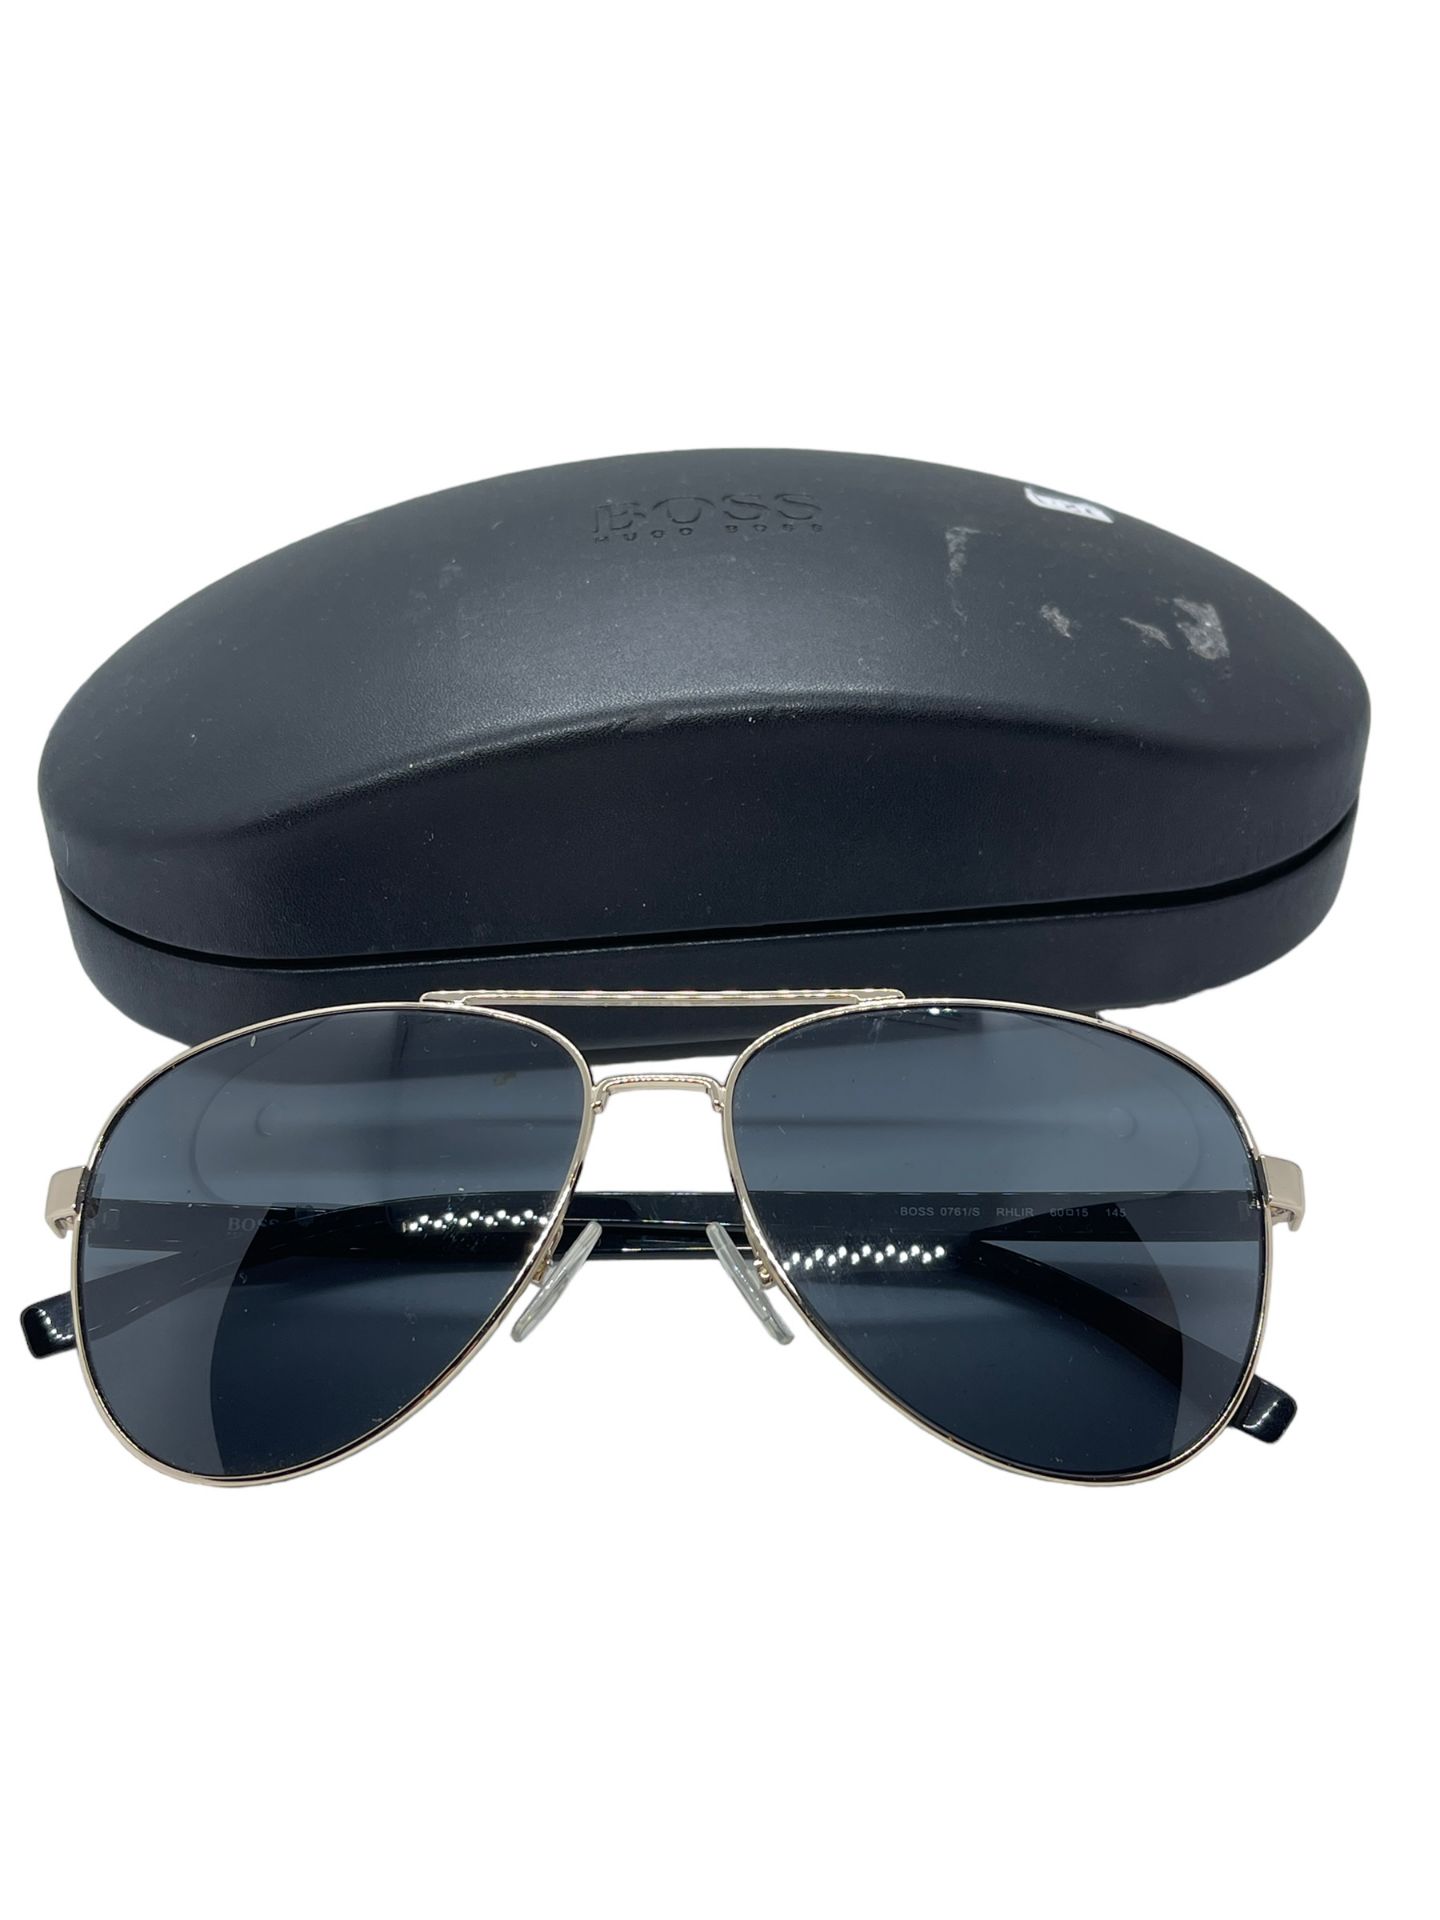 Hugo Boss Sunglasses gold plated aviators with case surplus stock xdemo - Bild 4 aus 6